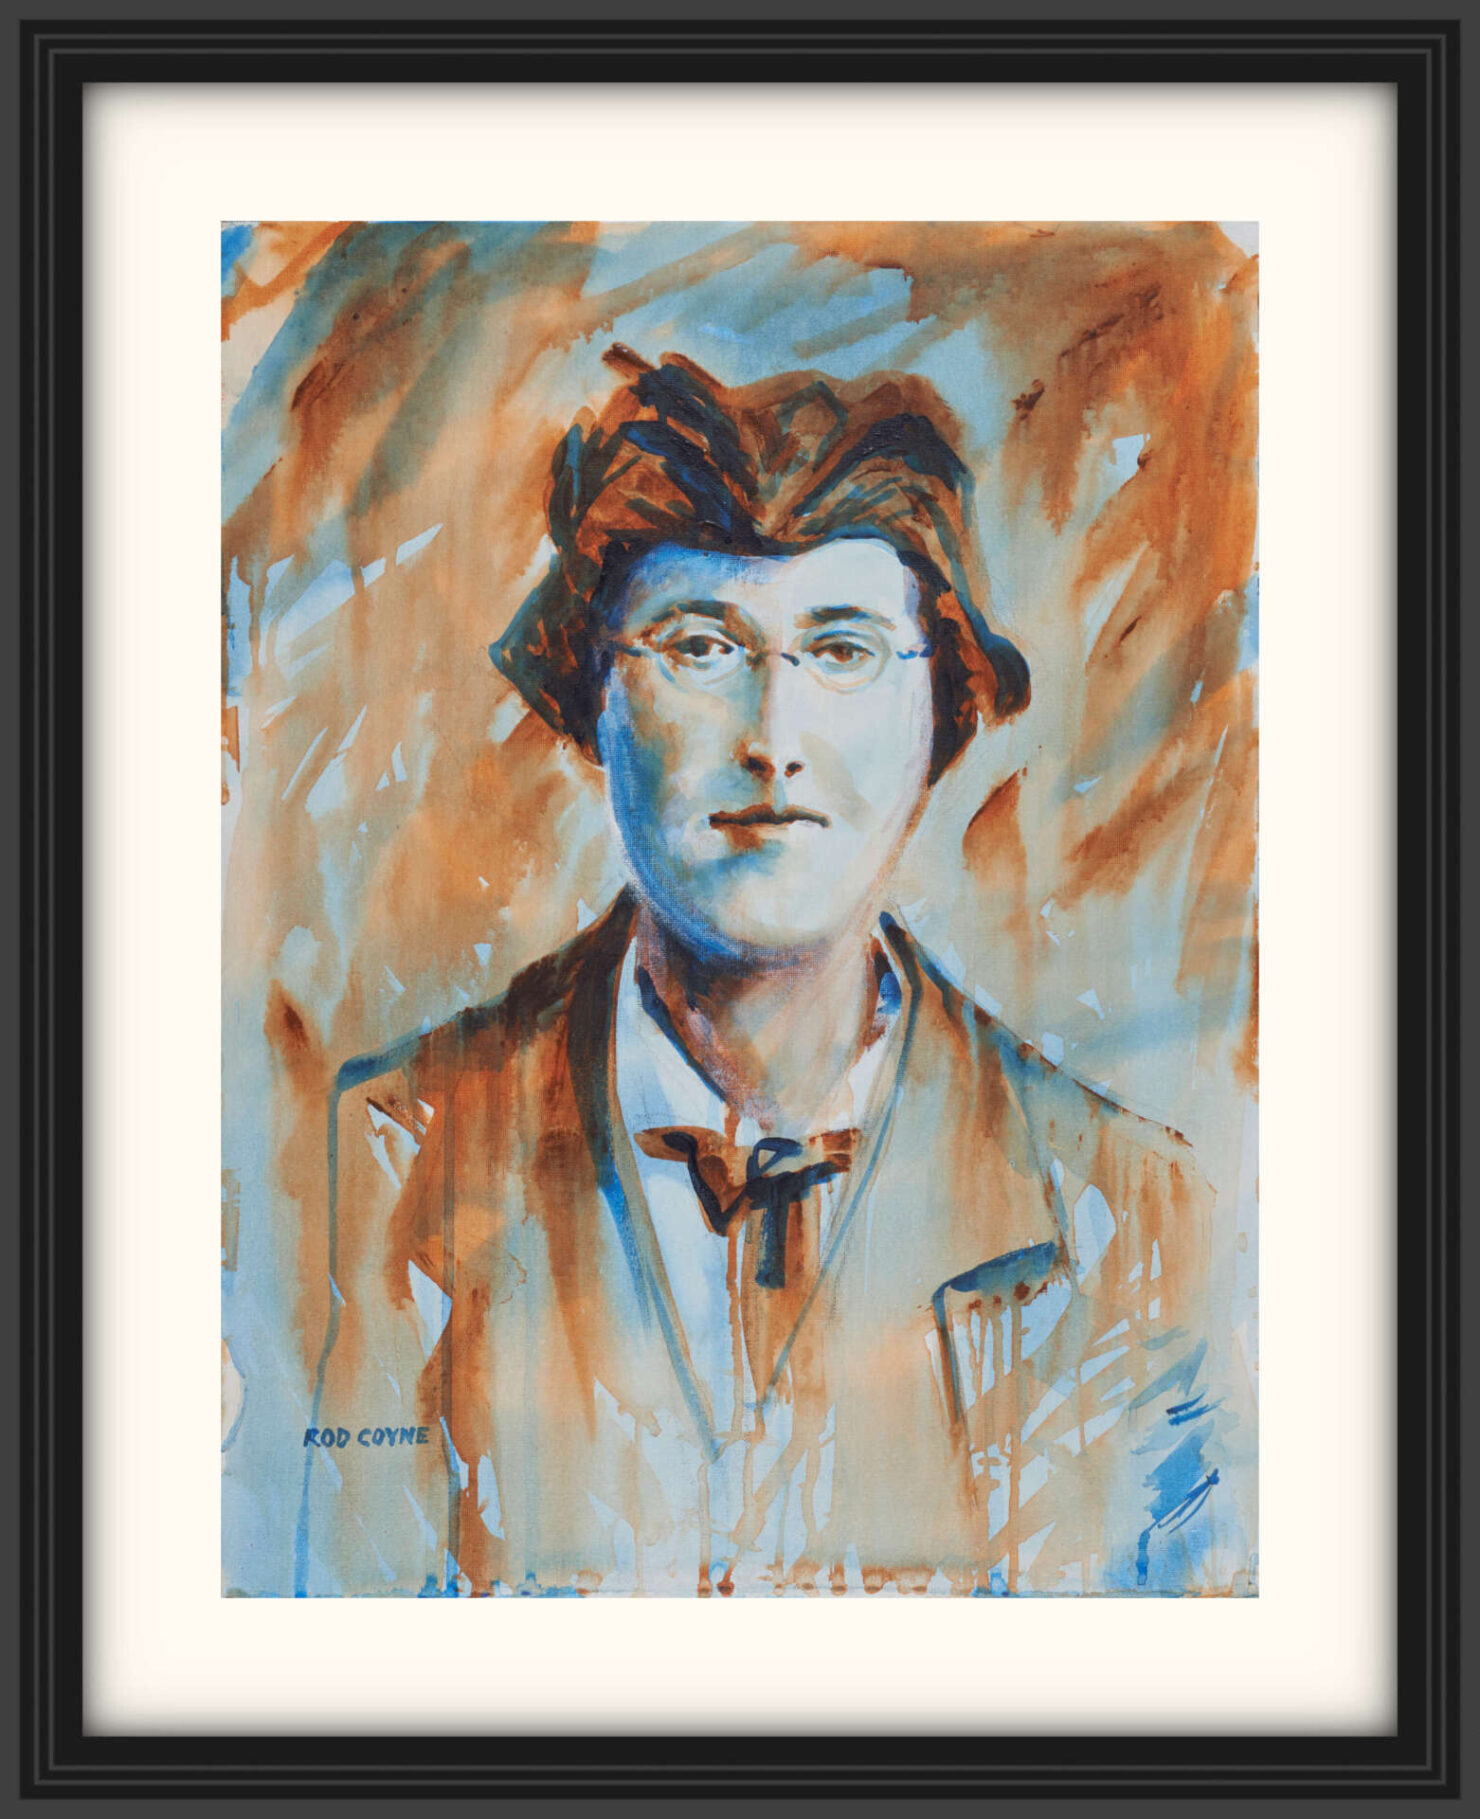 artist rod coyne's portrait "Margaret Skinnider 1916" is shown here, on a white mount in a black frame.